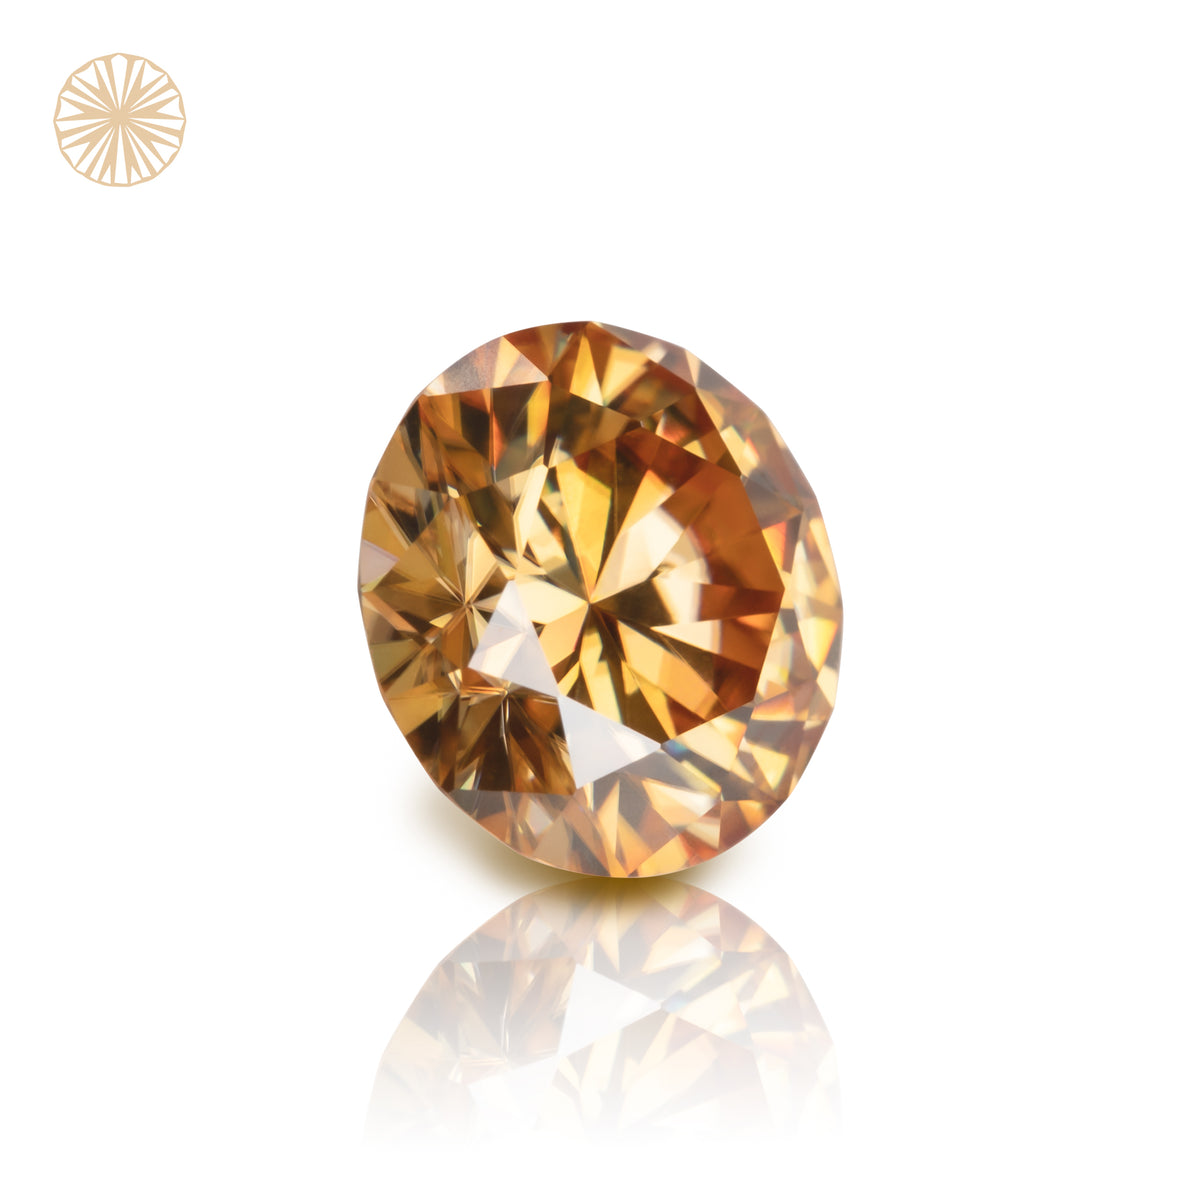 Golden Imperial Brilliant Cut Round Shape Moissanite Diamond Loose Gemstones GRA Certified Vivid Yellow VVS1 Moissanite Fancy Cut for Jewelry Making